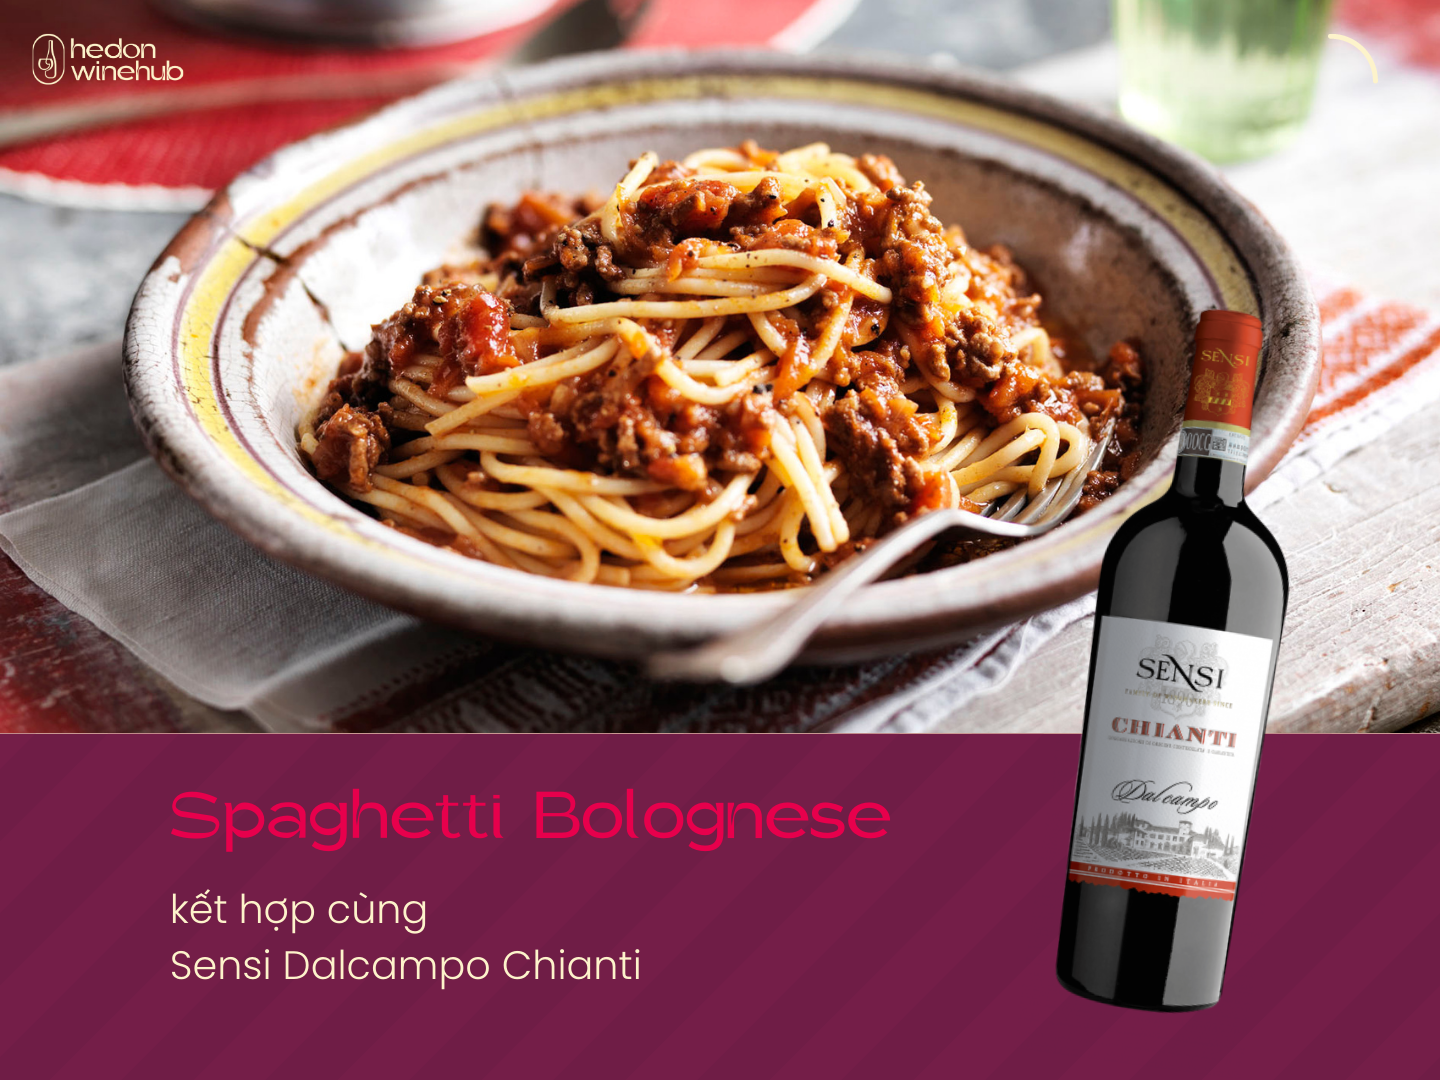 Spaghetti Bolognese kết hợp cùng Sensi Dalcampo Chianti